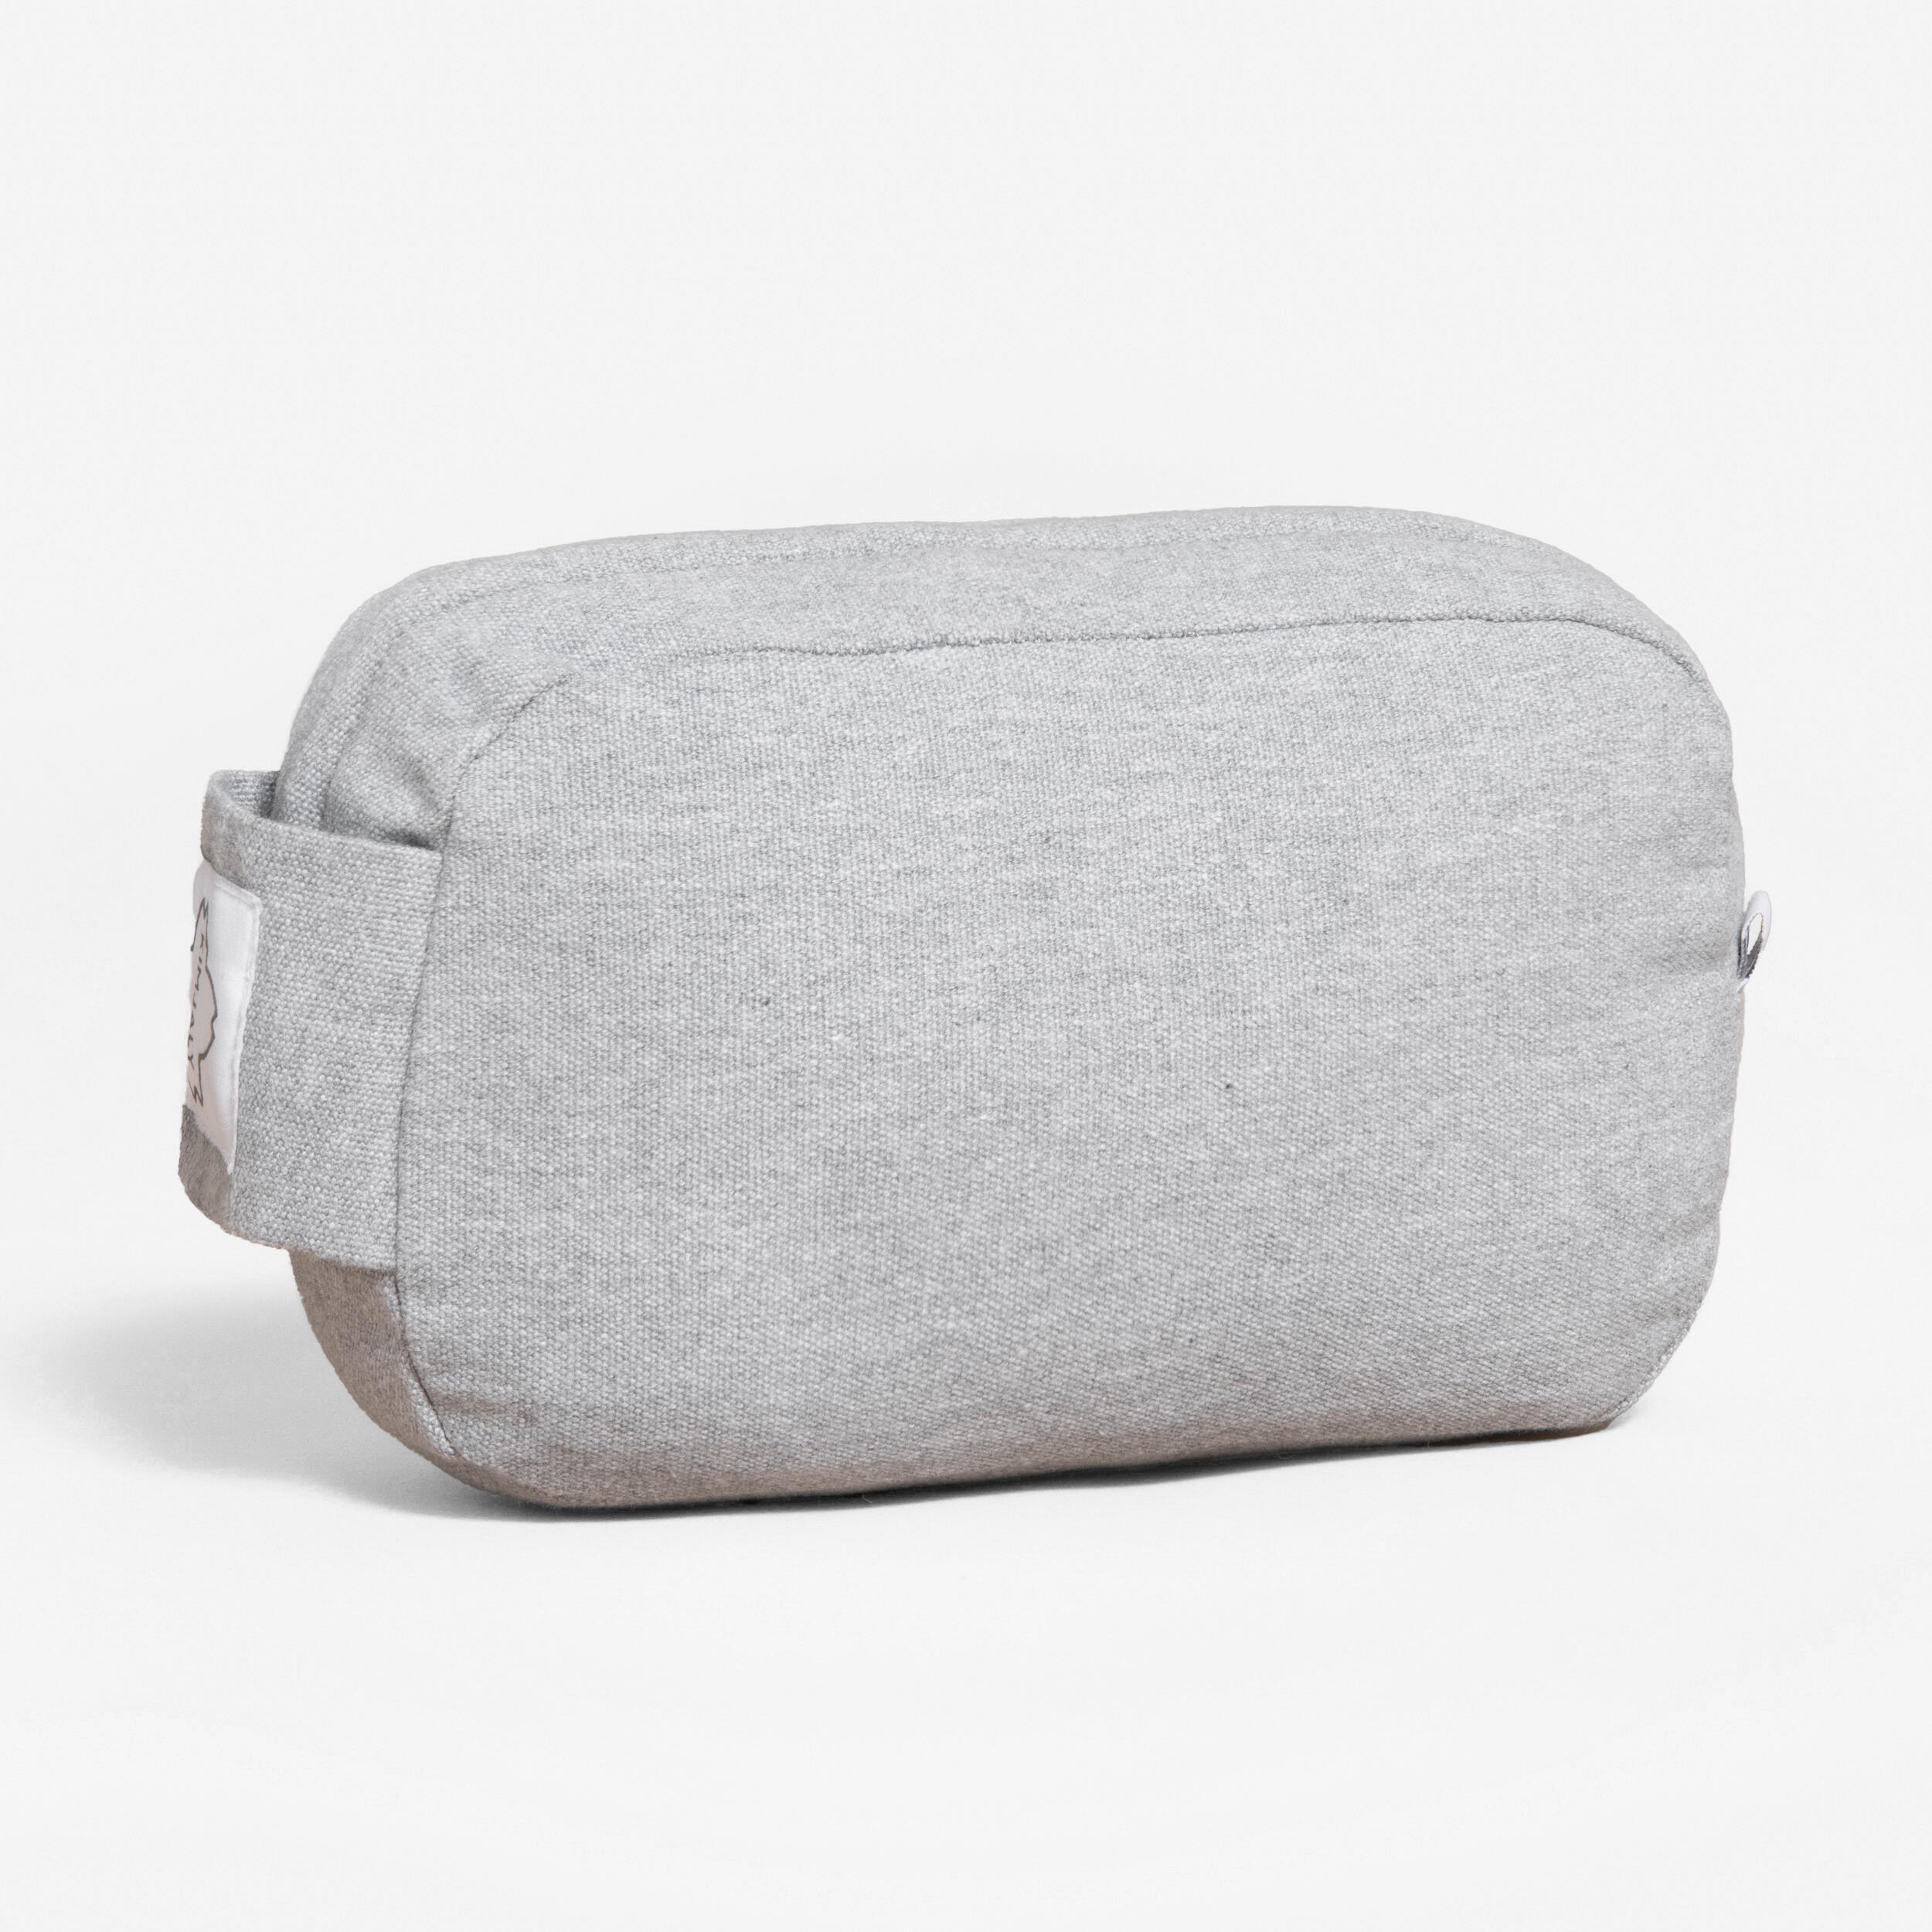 
Rectangular Yoga Pillow 23 cm x 14 cm x 7.5 cm - Grey 1/2